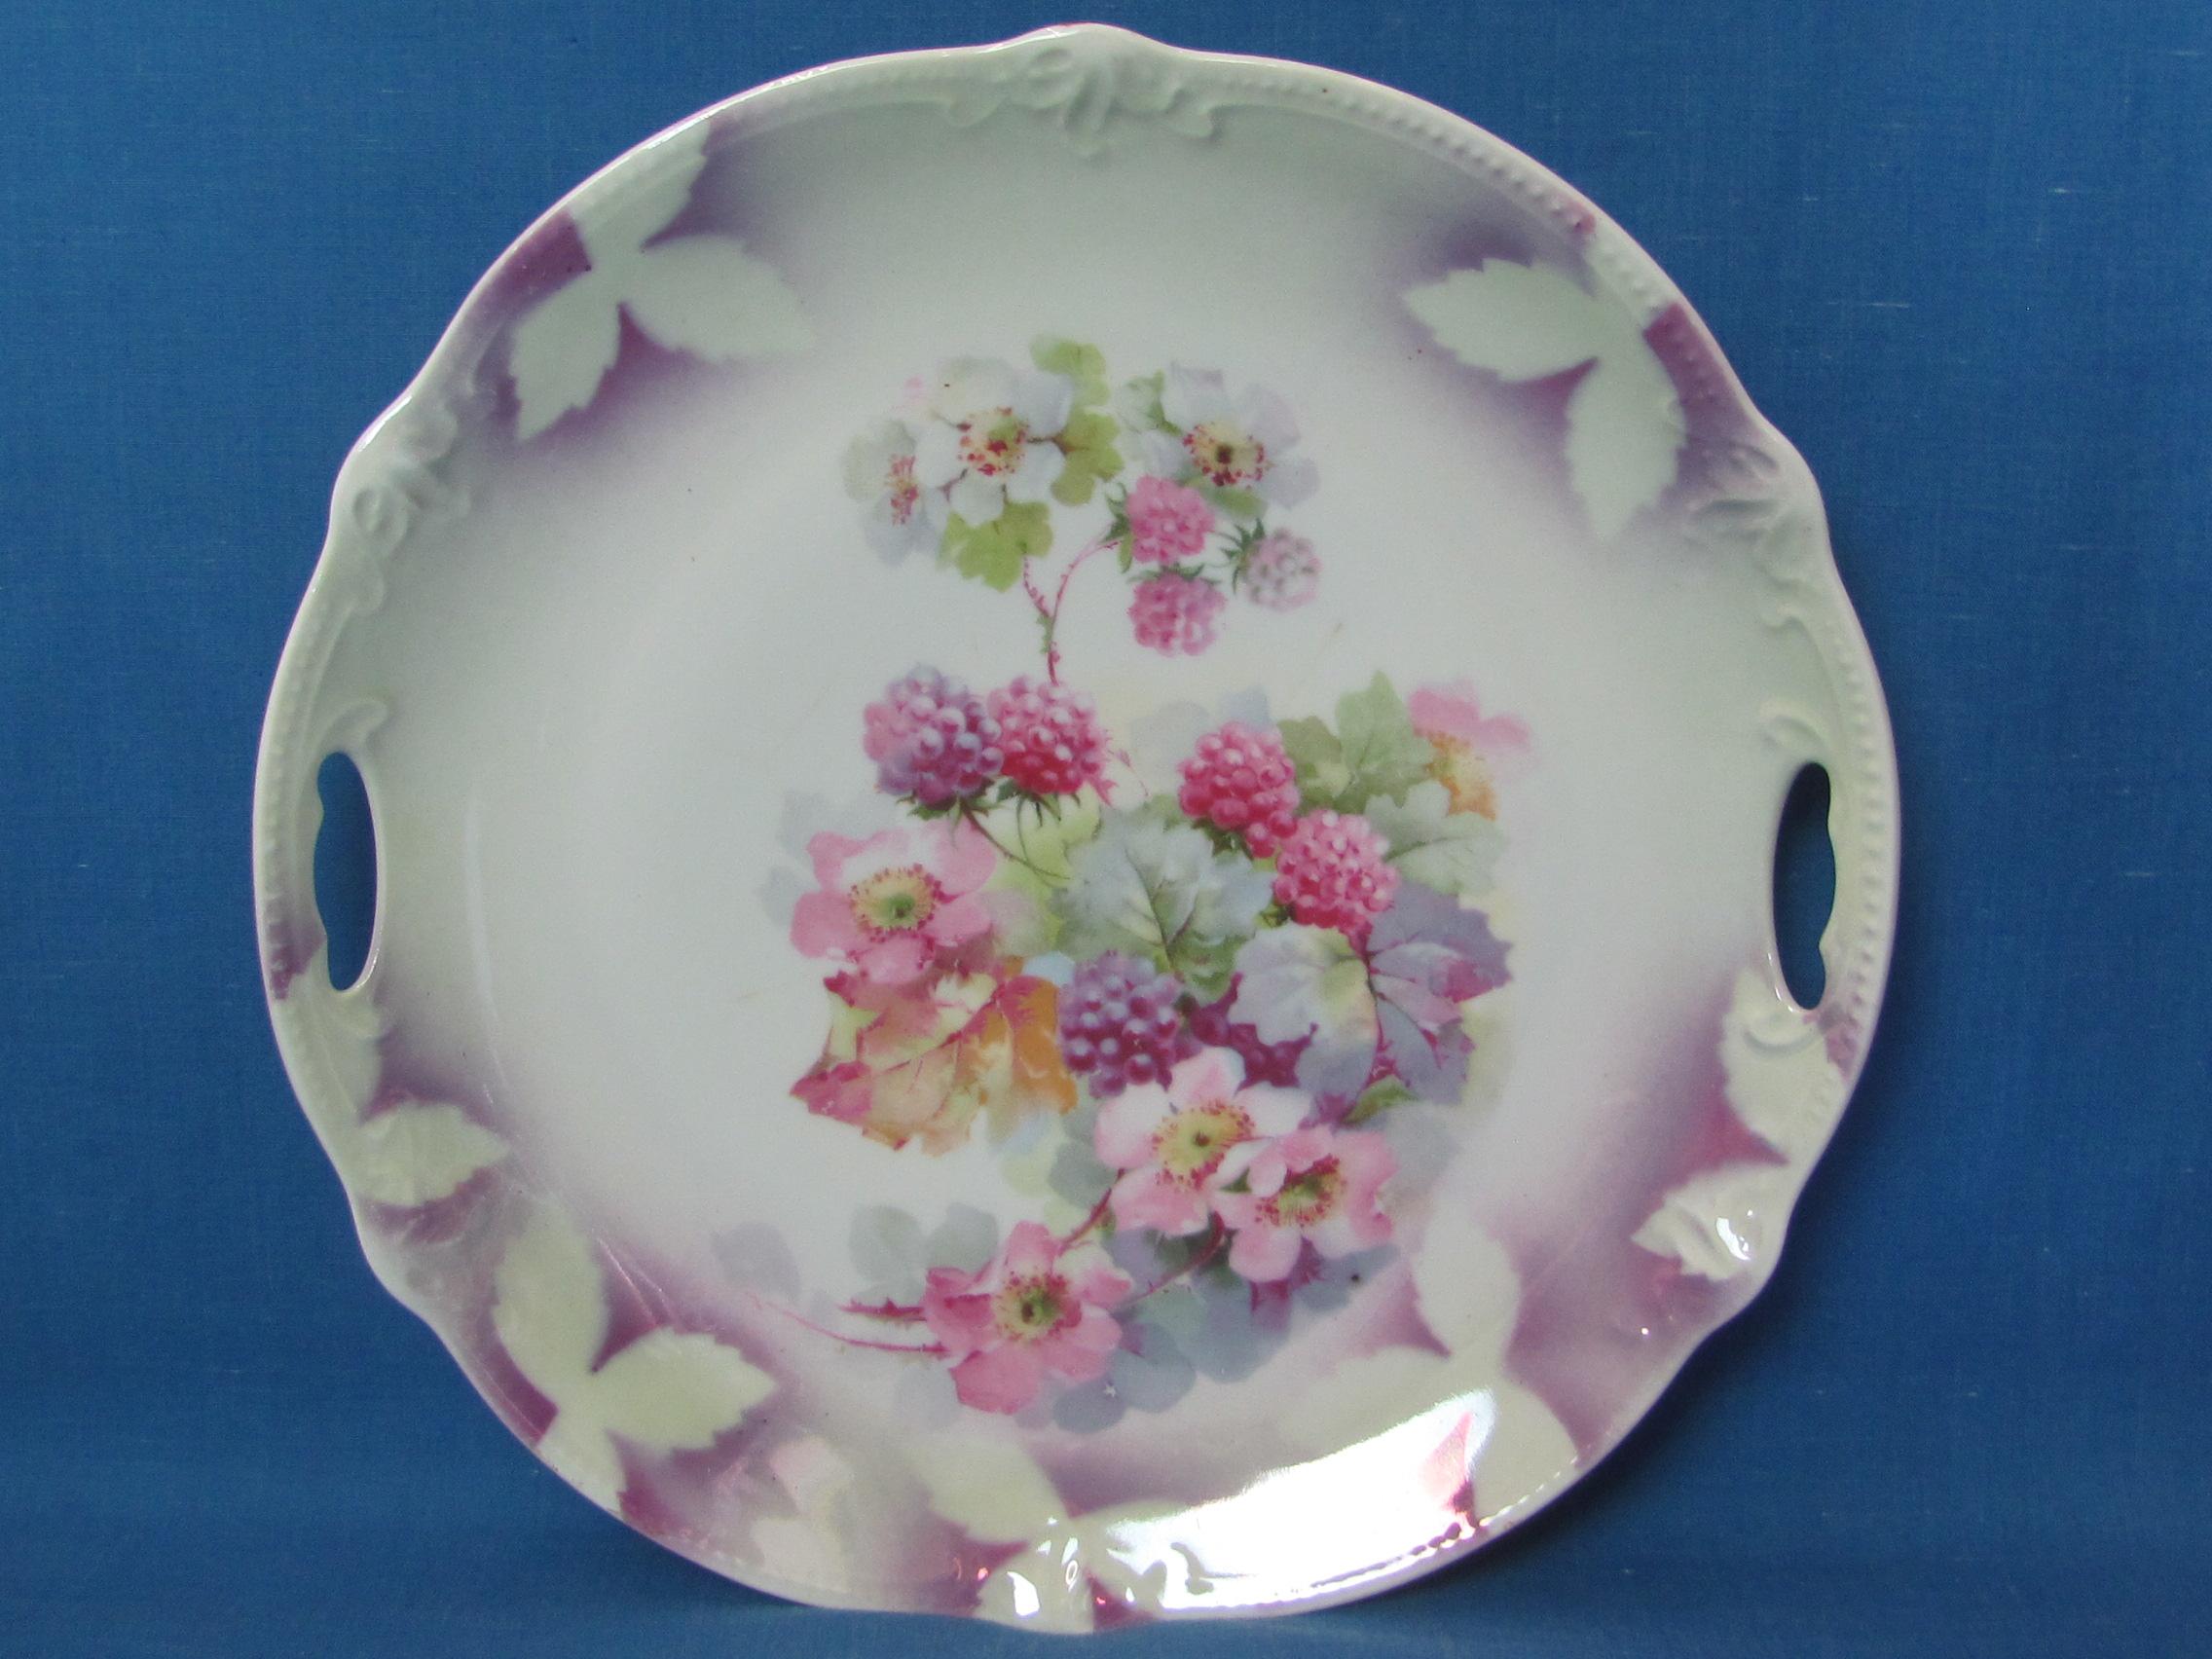 Lot of 4 Decorative Porcelain/Ceramic Plates – Floral Designs – 1 w Transfer of Woman